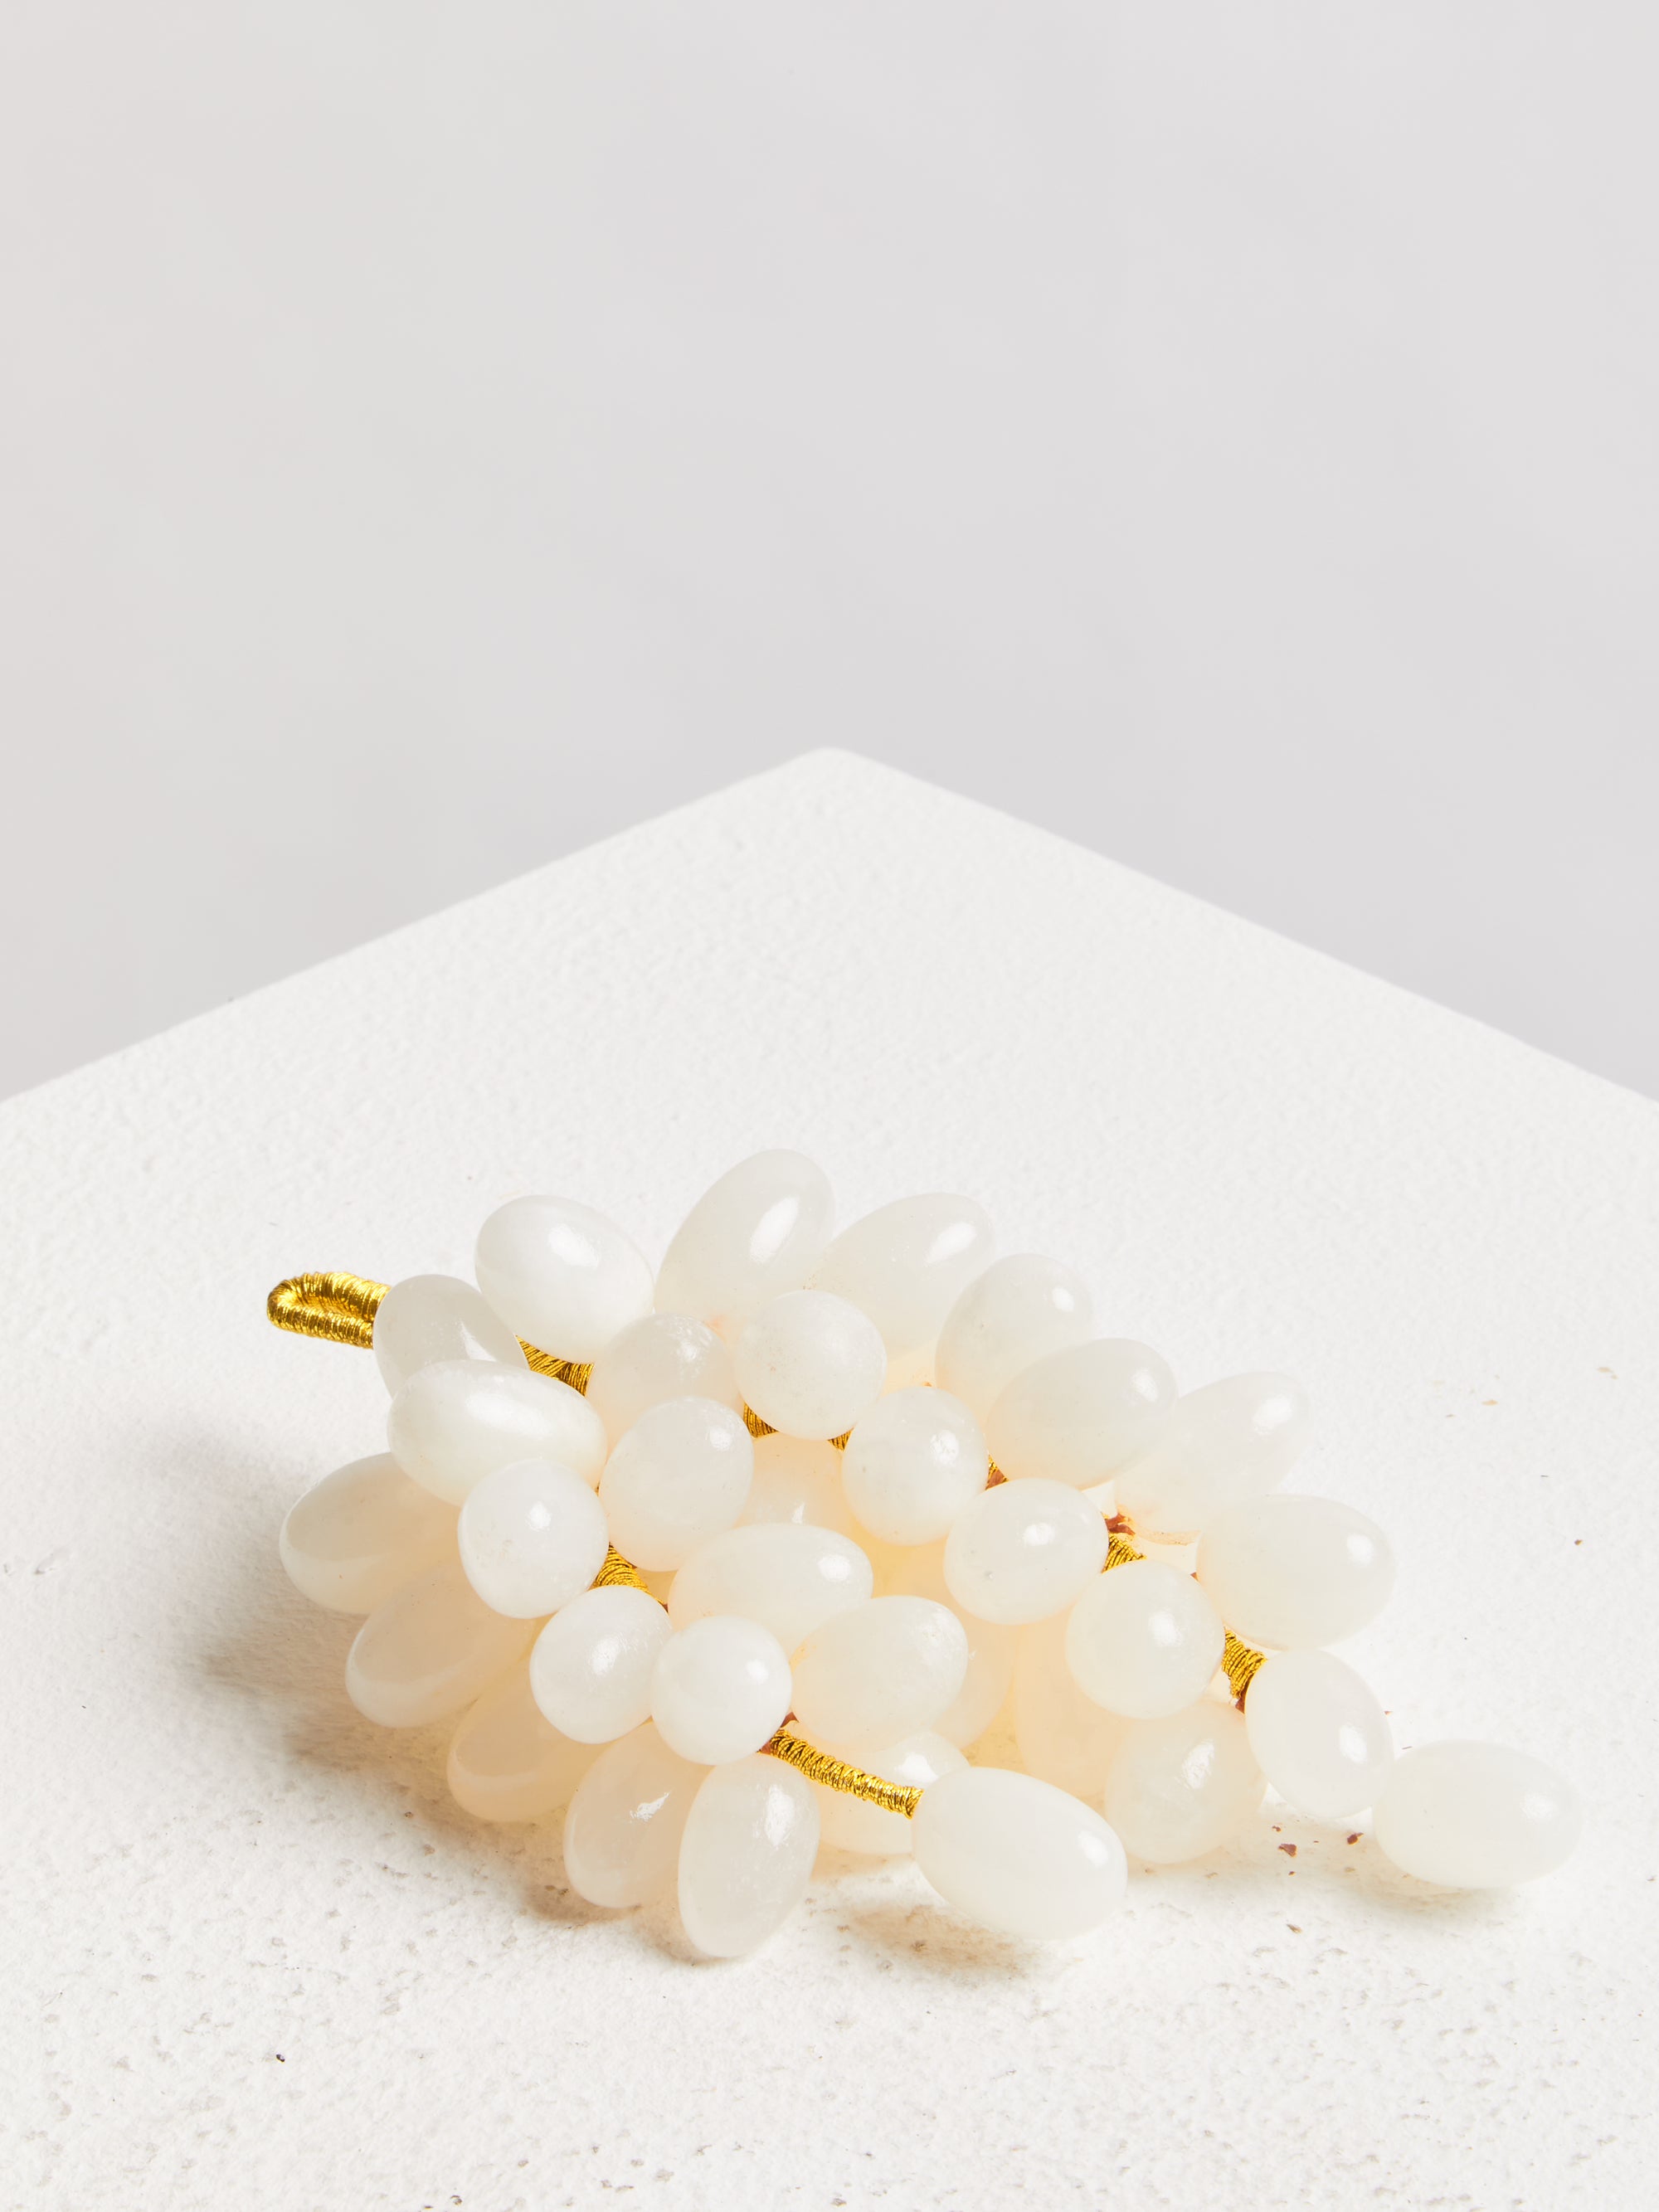 Oleena White Onyx Decorative Grapes